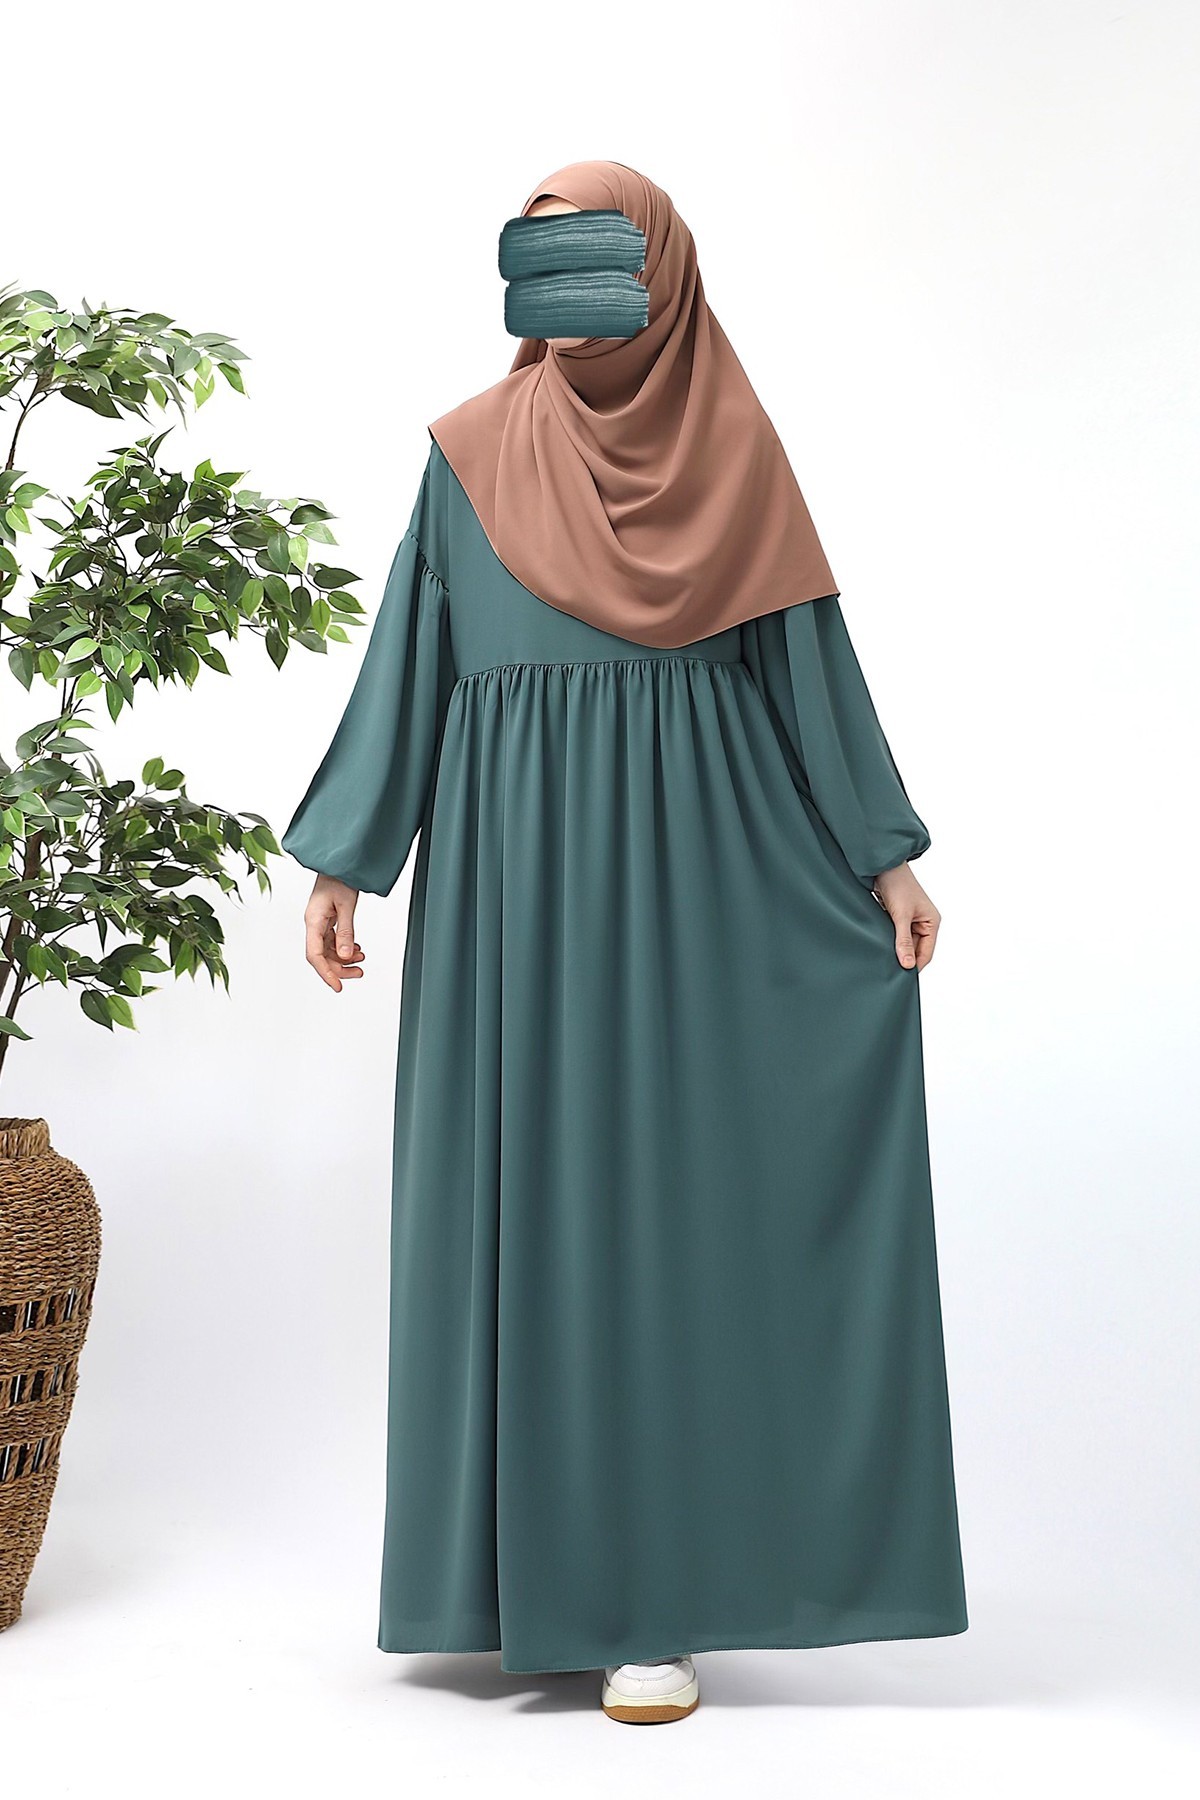 Rabia Medina Dress - Turquoise Green